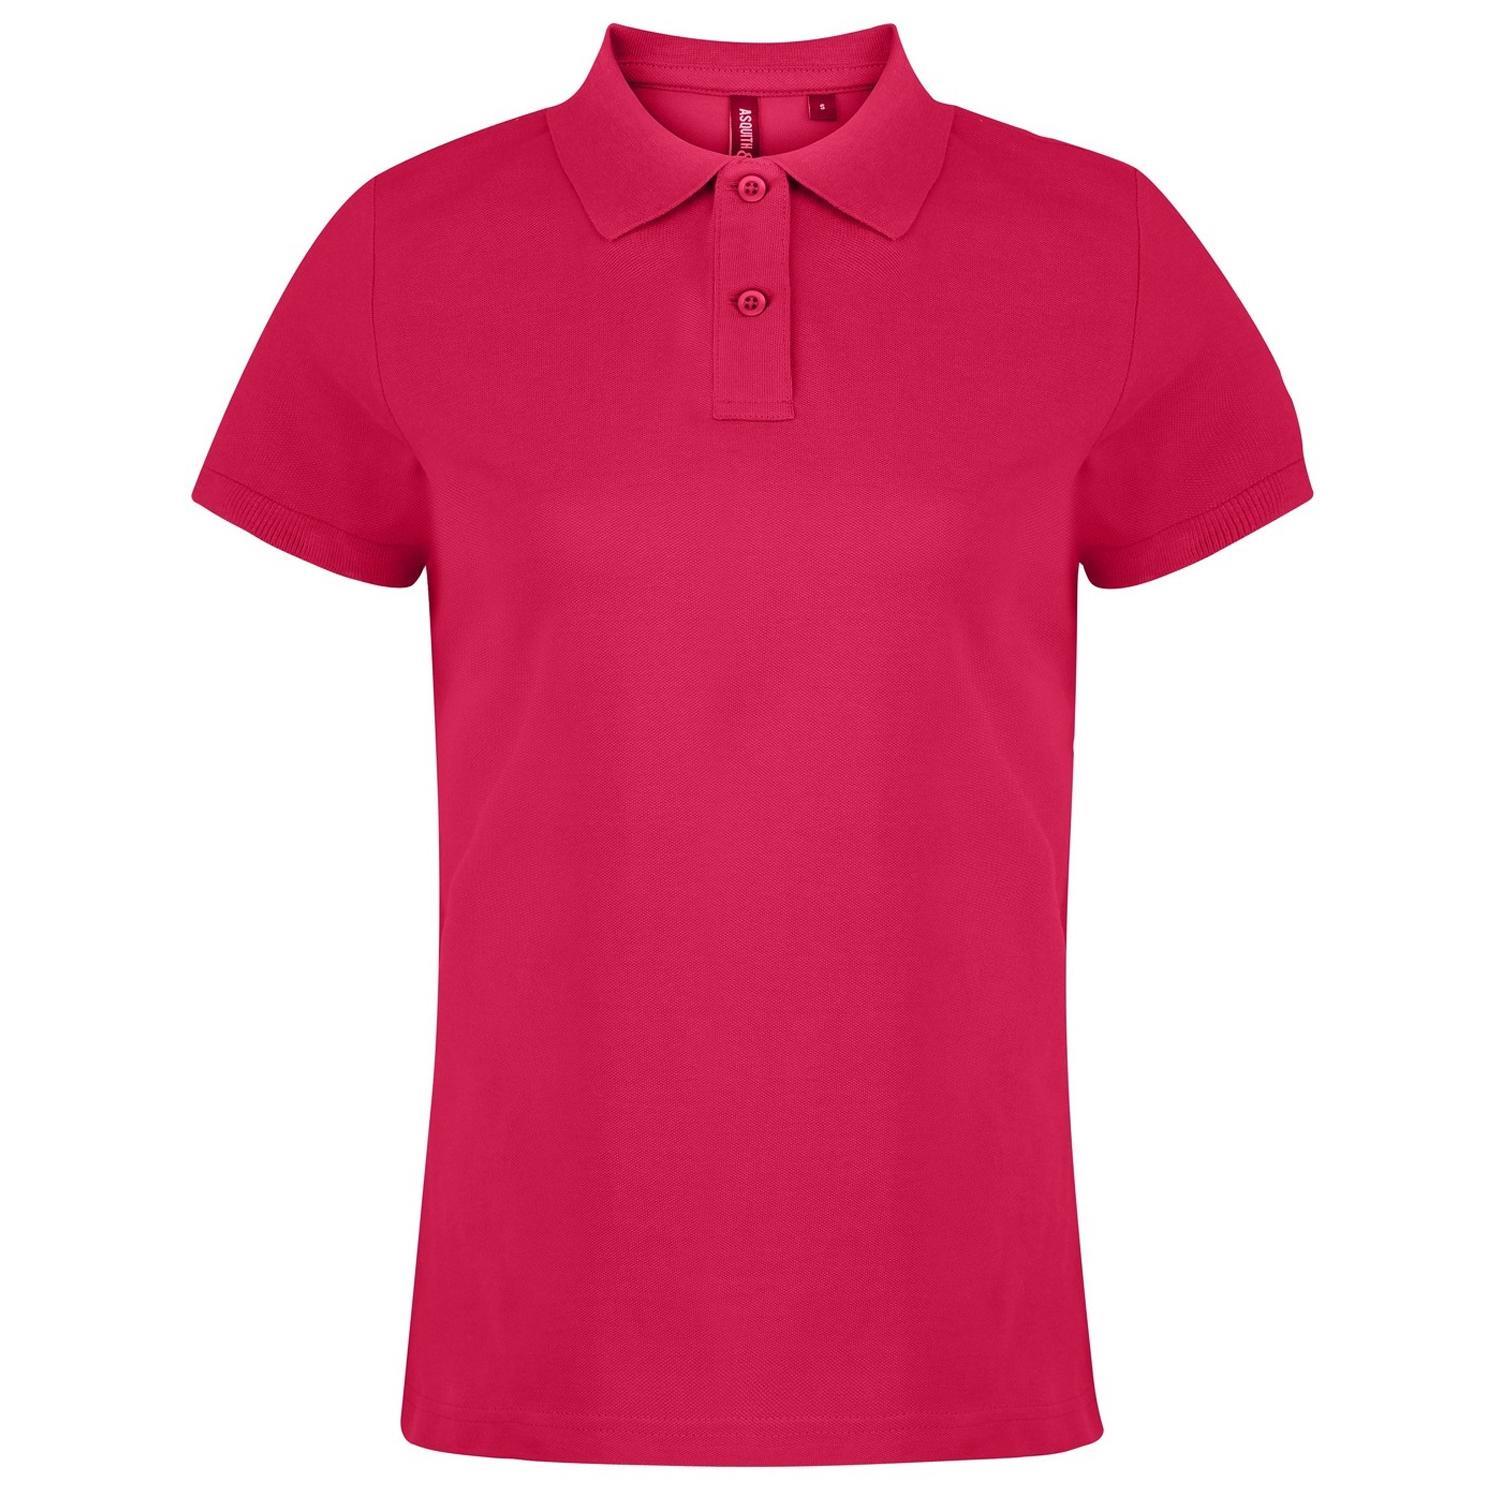 Asquith & Fox Womens/Ladies Plain Short Sleeve Polo Shirt (Hot Pink) (L)